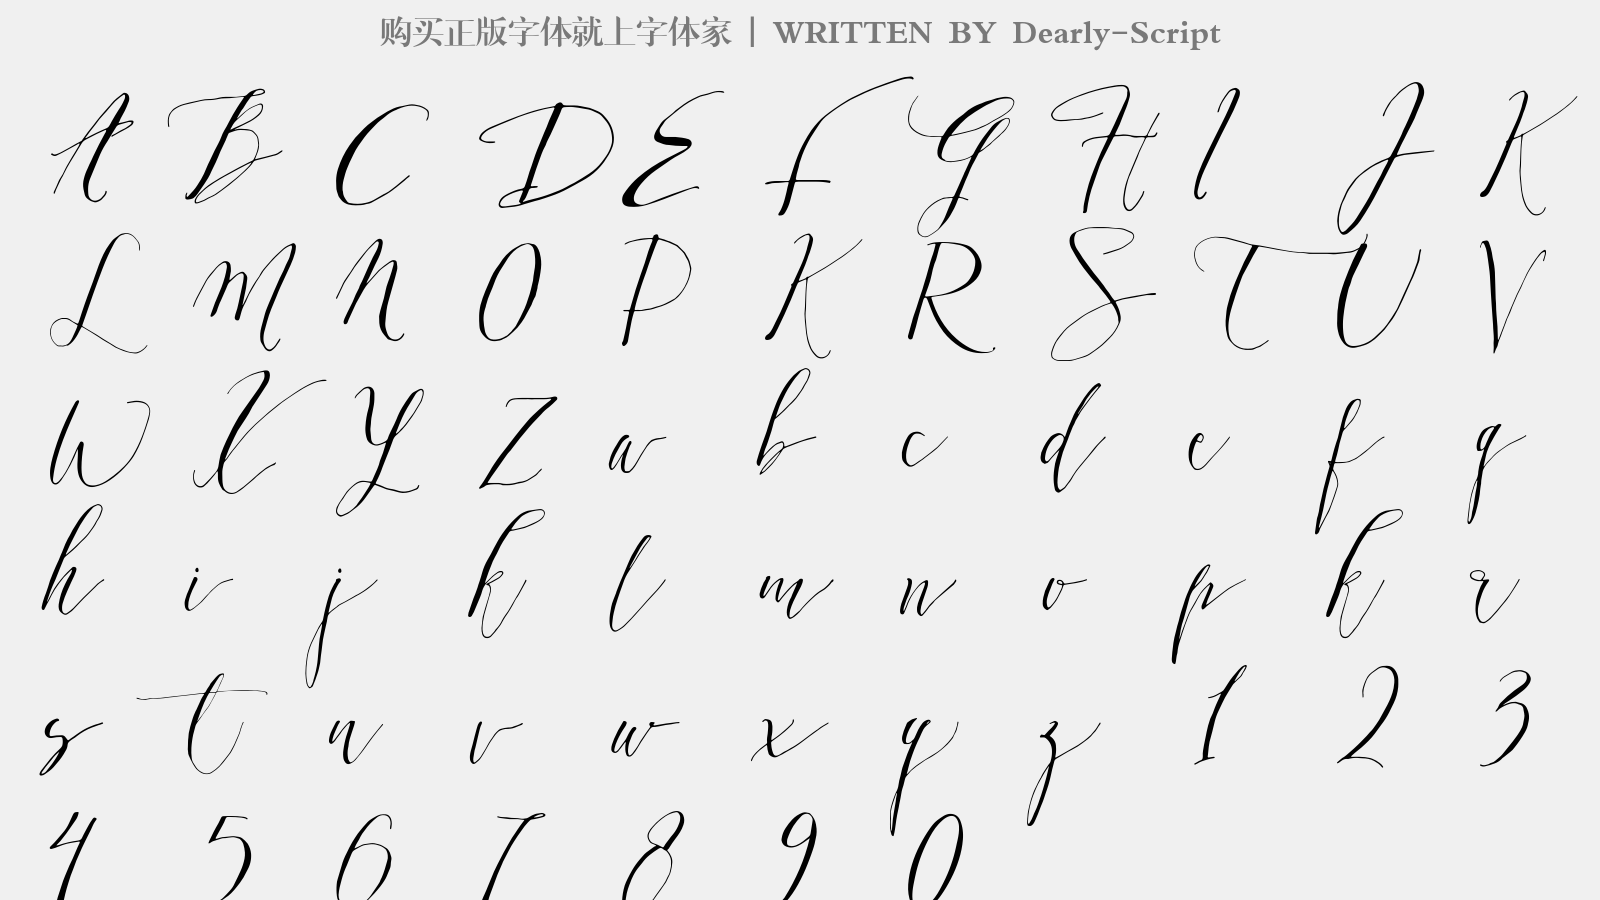 Dearly-Script - 大写字母/小写字母/数字